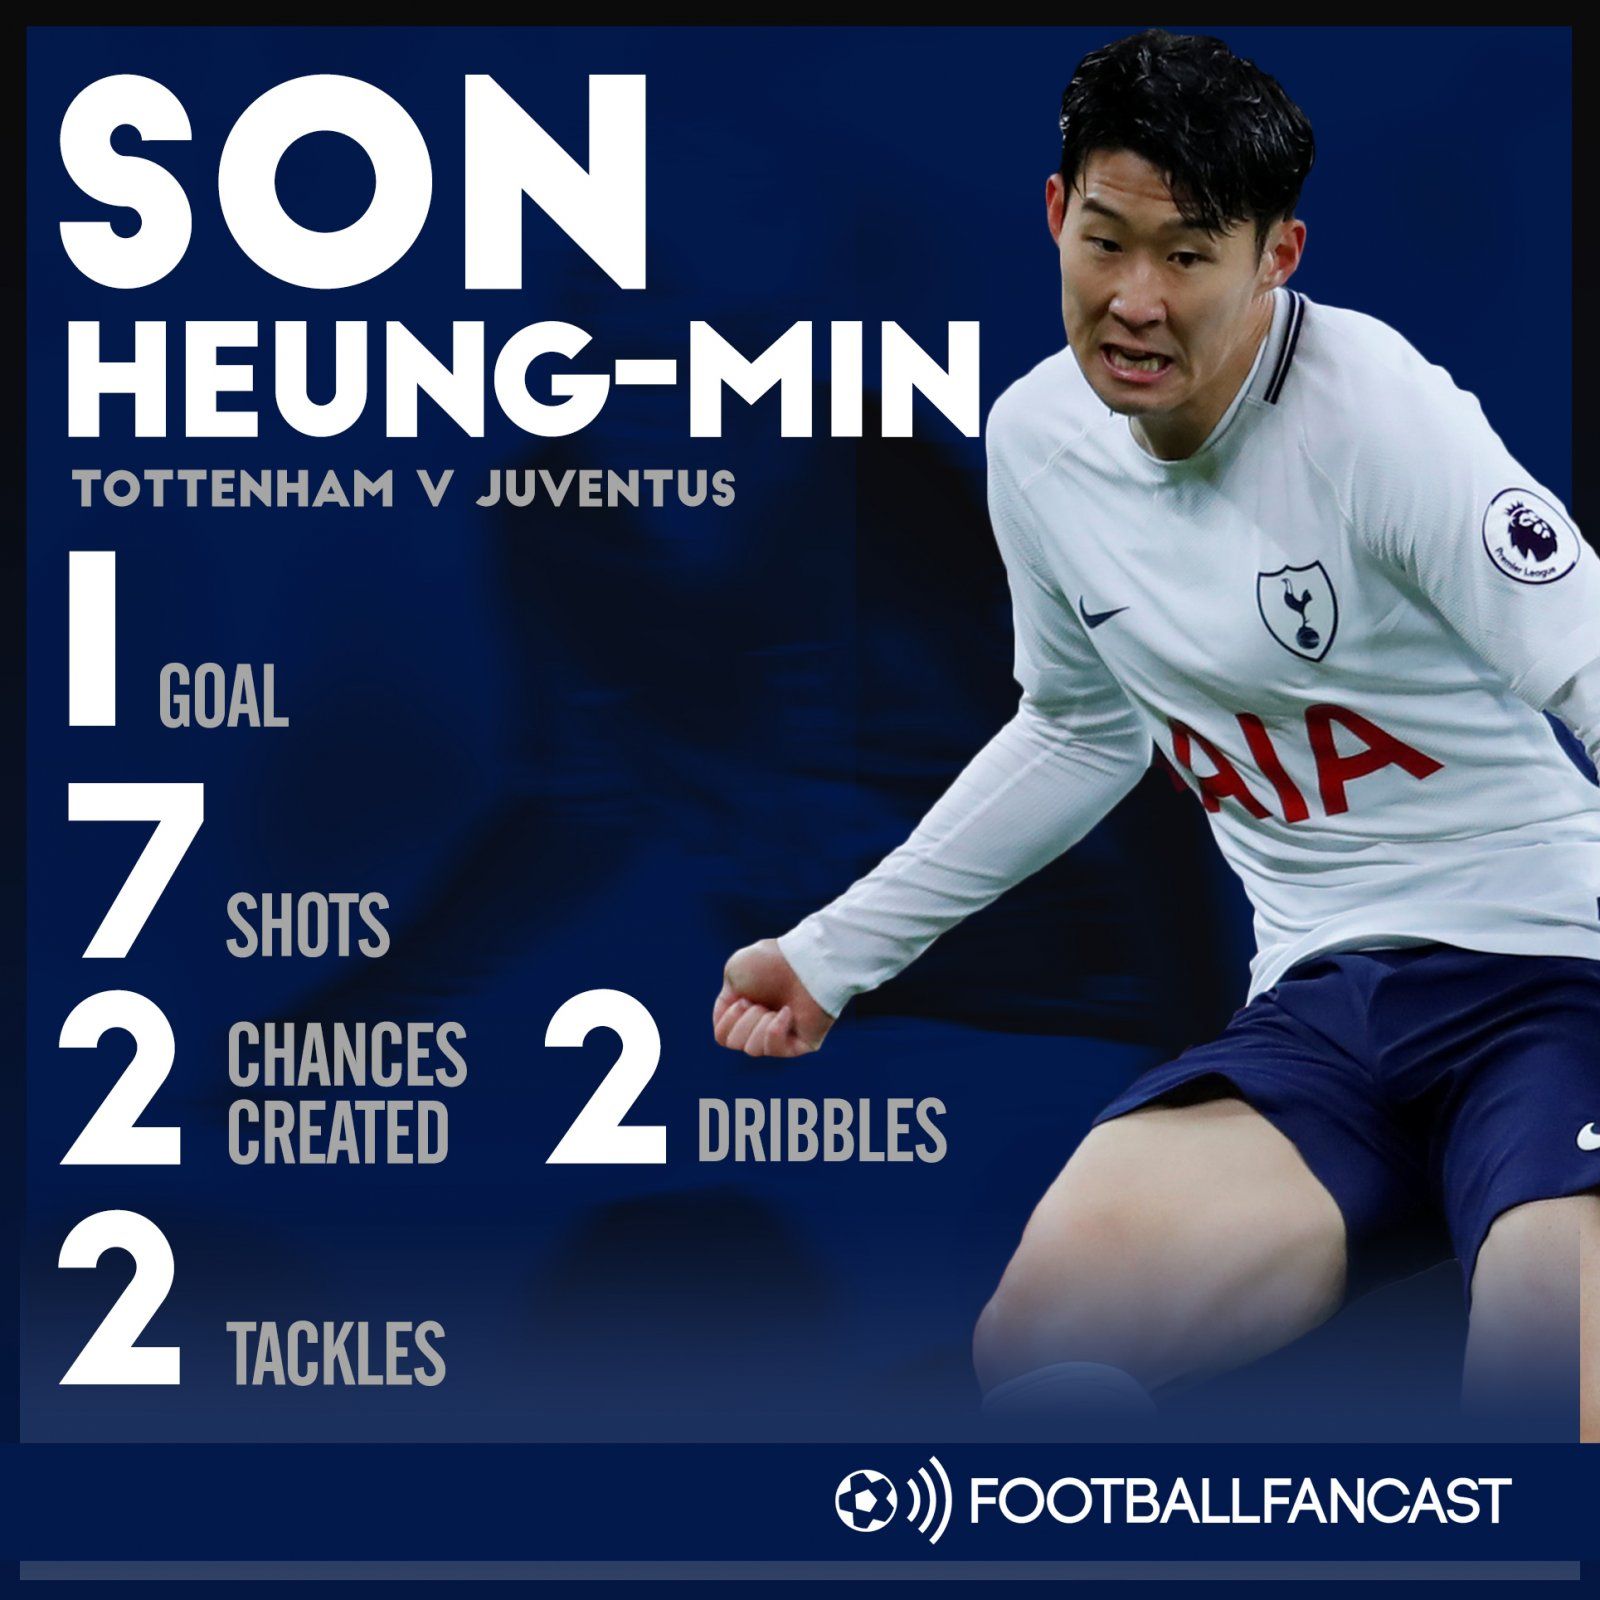 Heung-min Son's stats vs Juventus